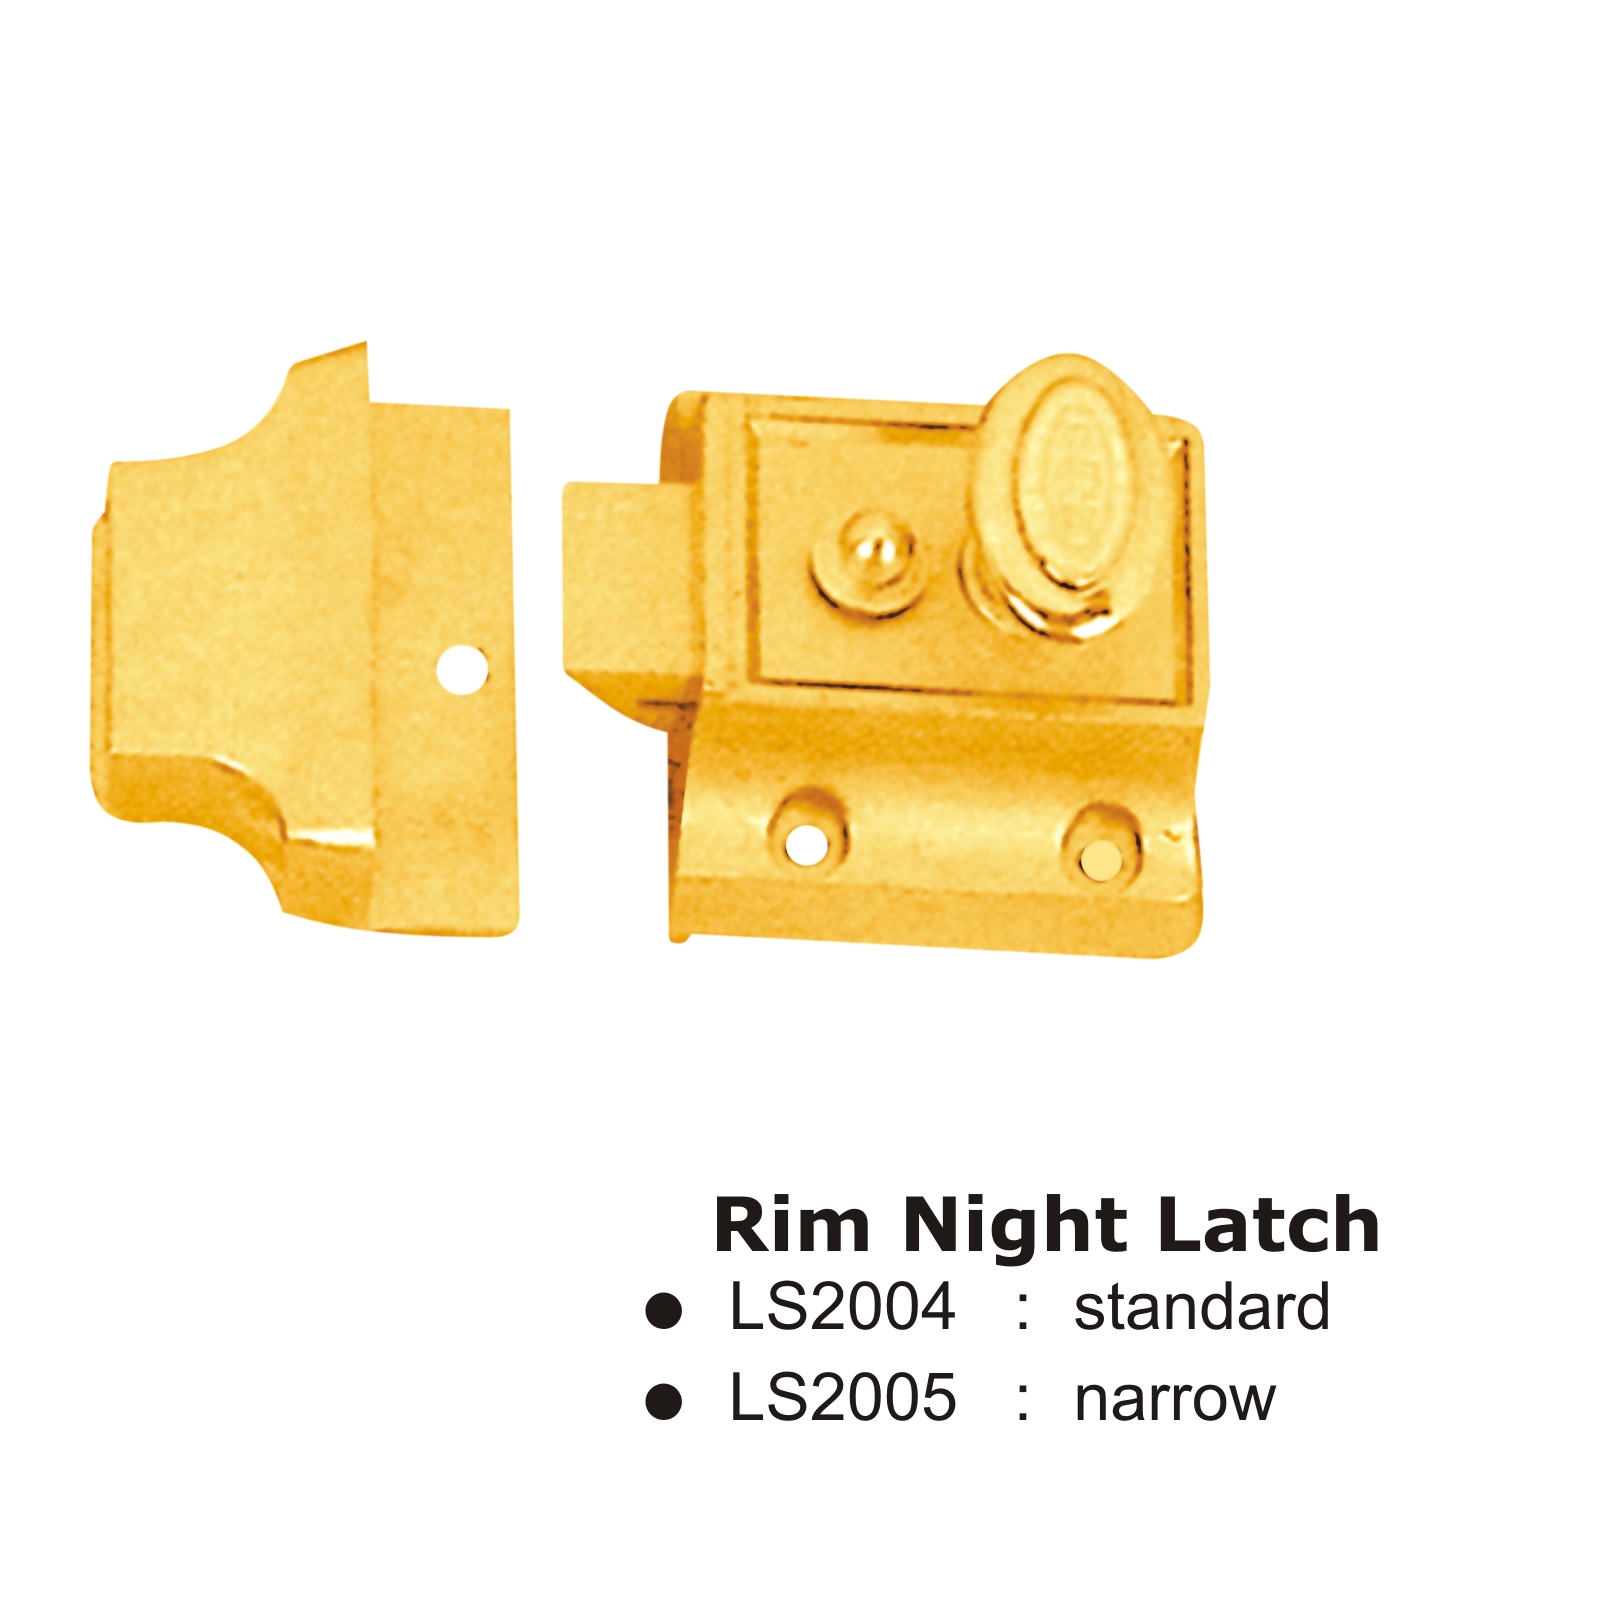 Rim Night Latch -: Narrow